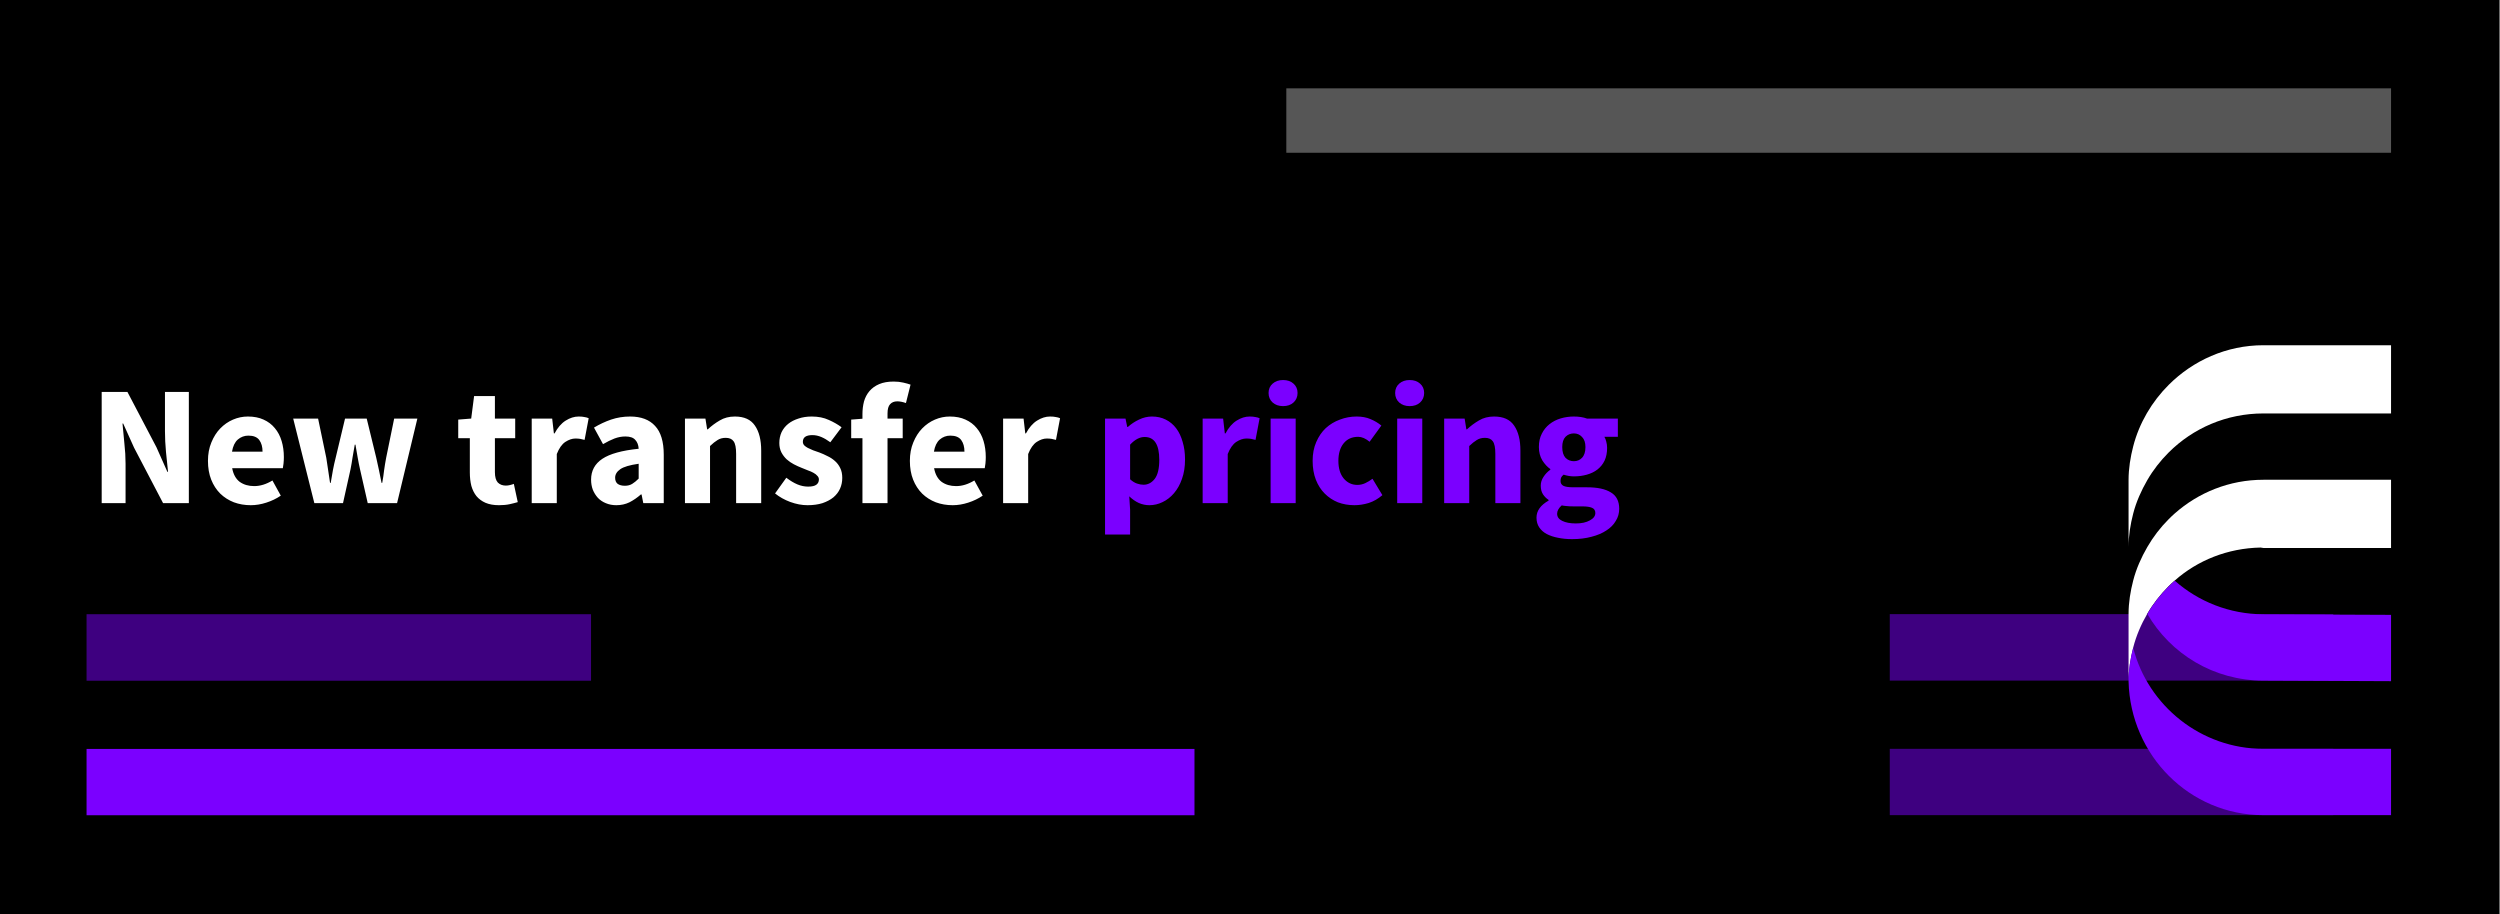 data transfer pricing